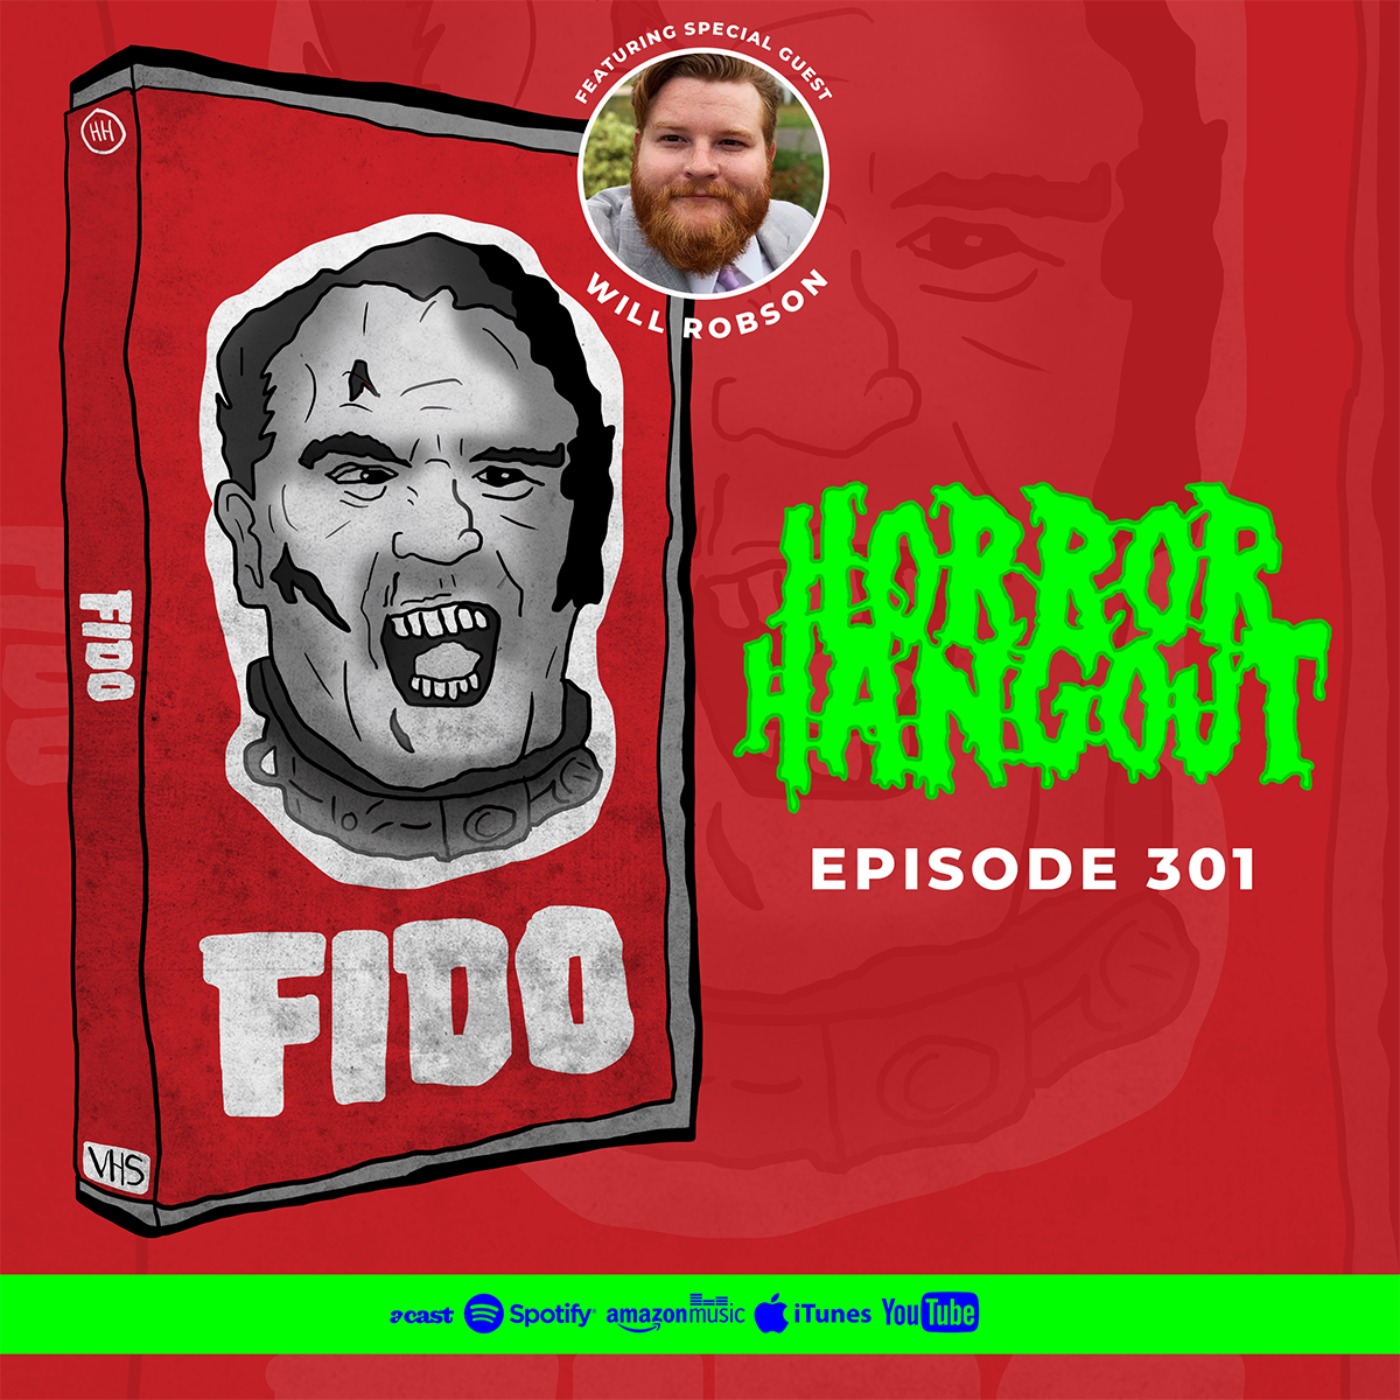 Horror Hangout #301 : Fido (w/ Will Robson)